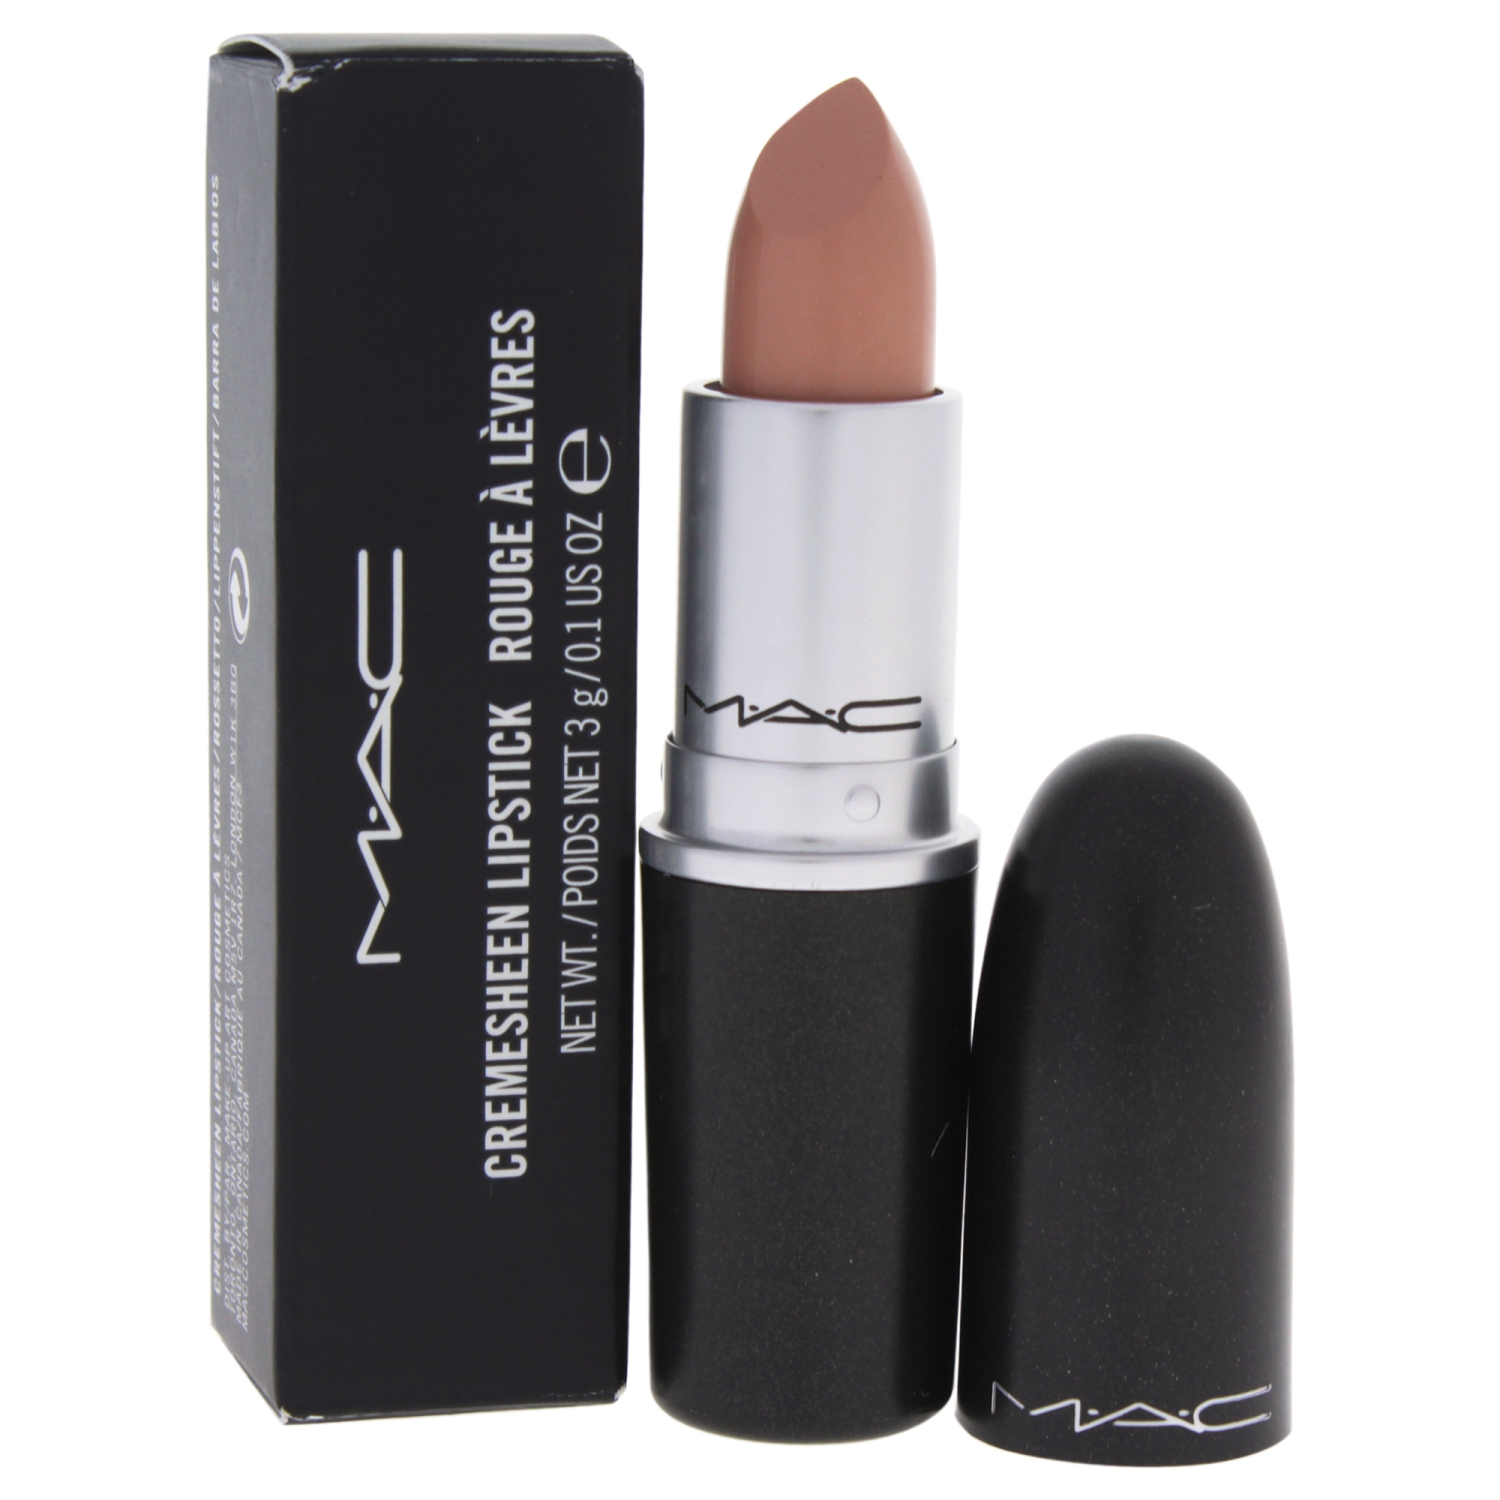 Cremesheen Lipstick - Creme DNude by MAC for Women - 0.1 oz Lipstick